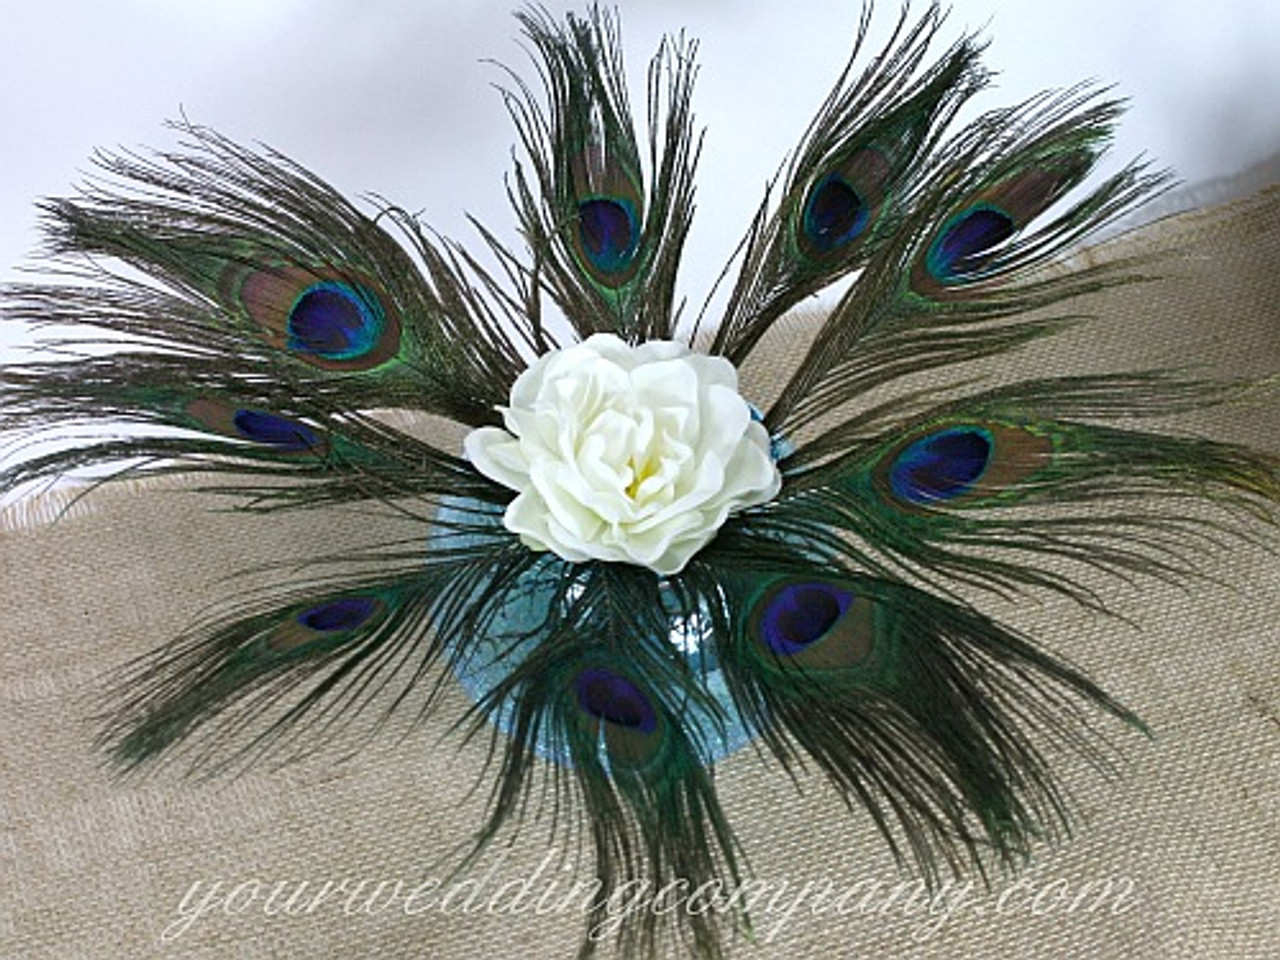 Black Marabou Feathers (5to 6)